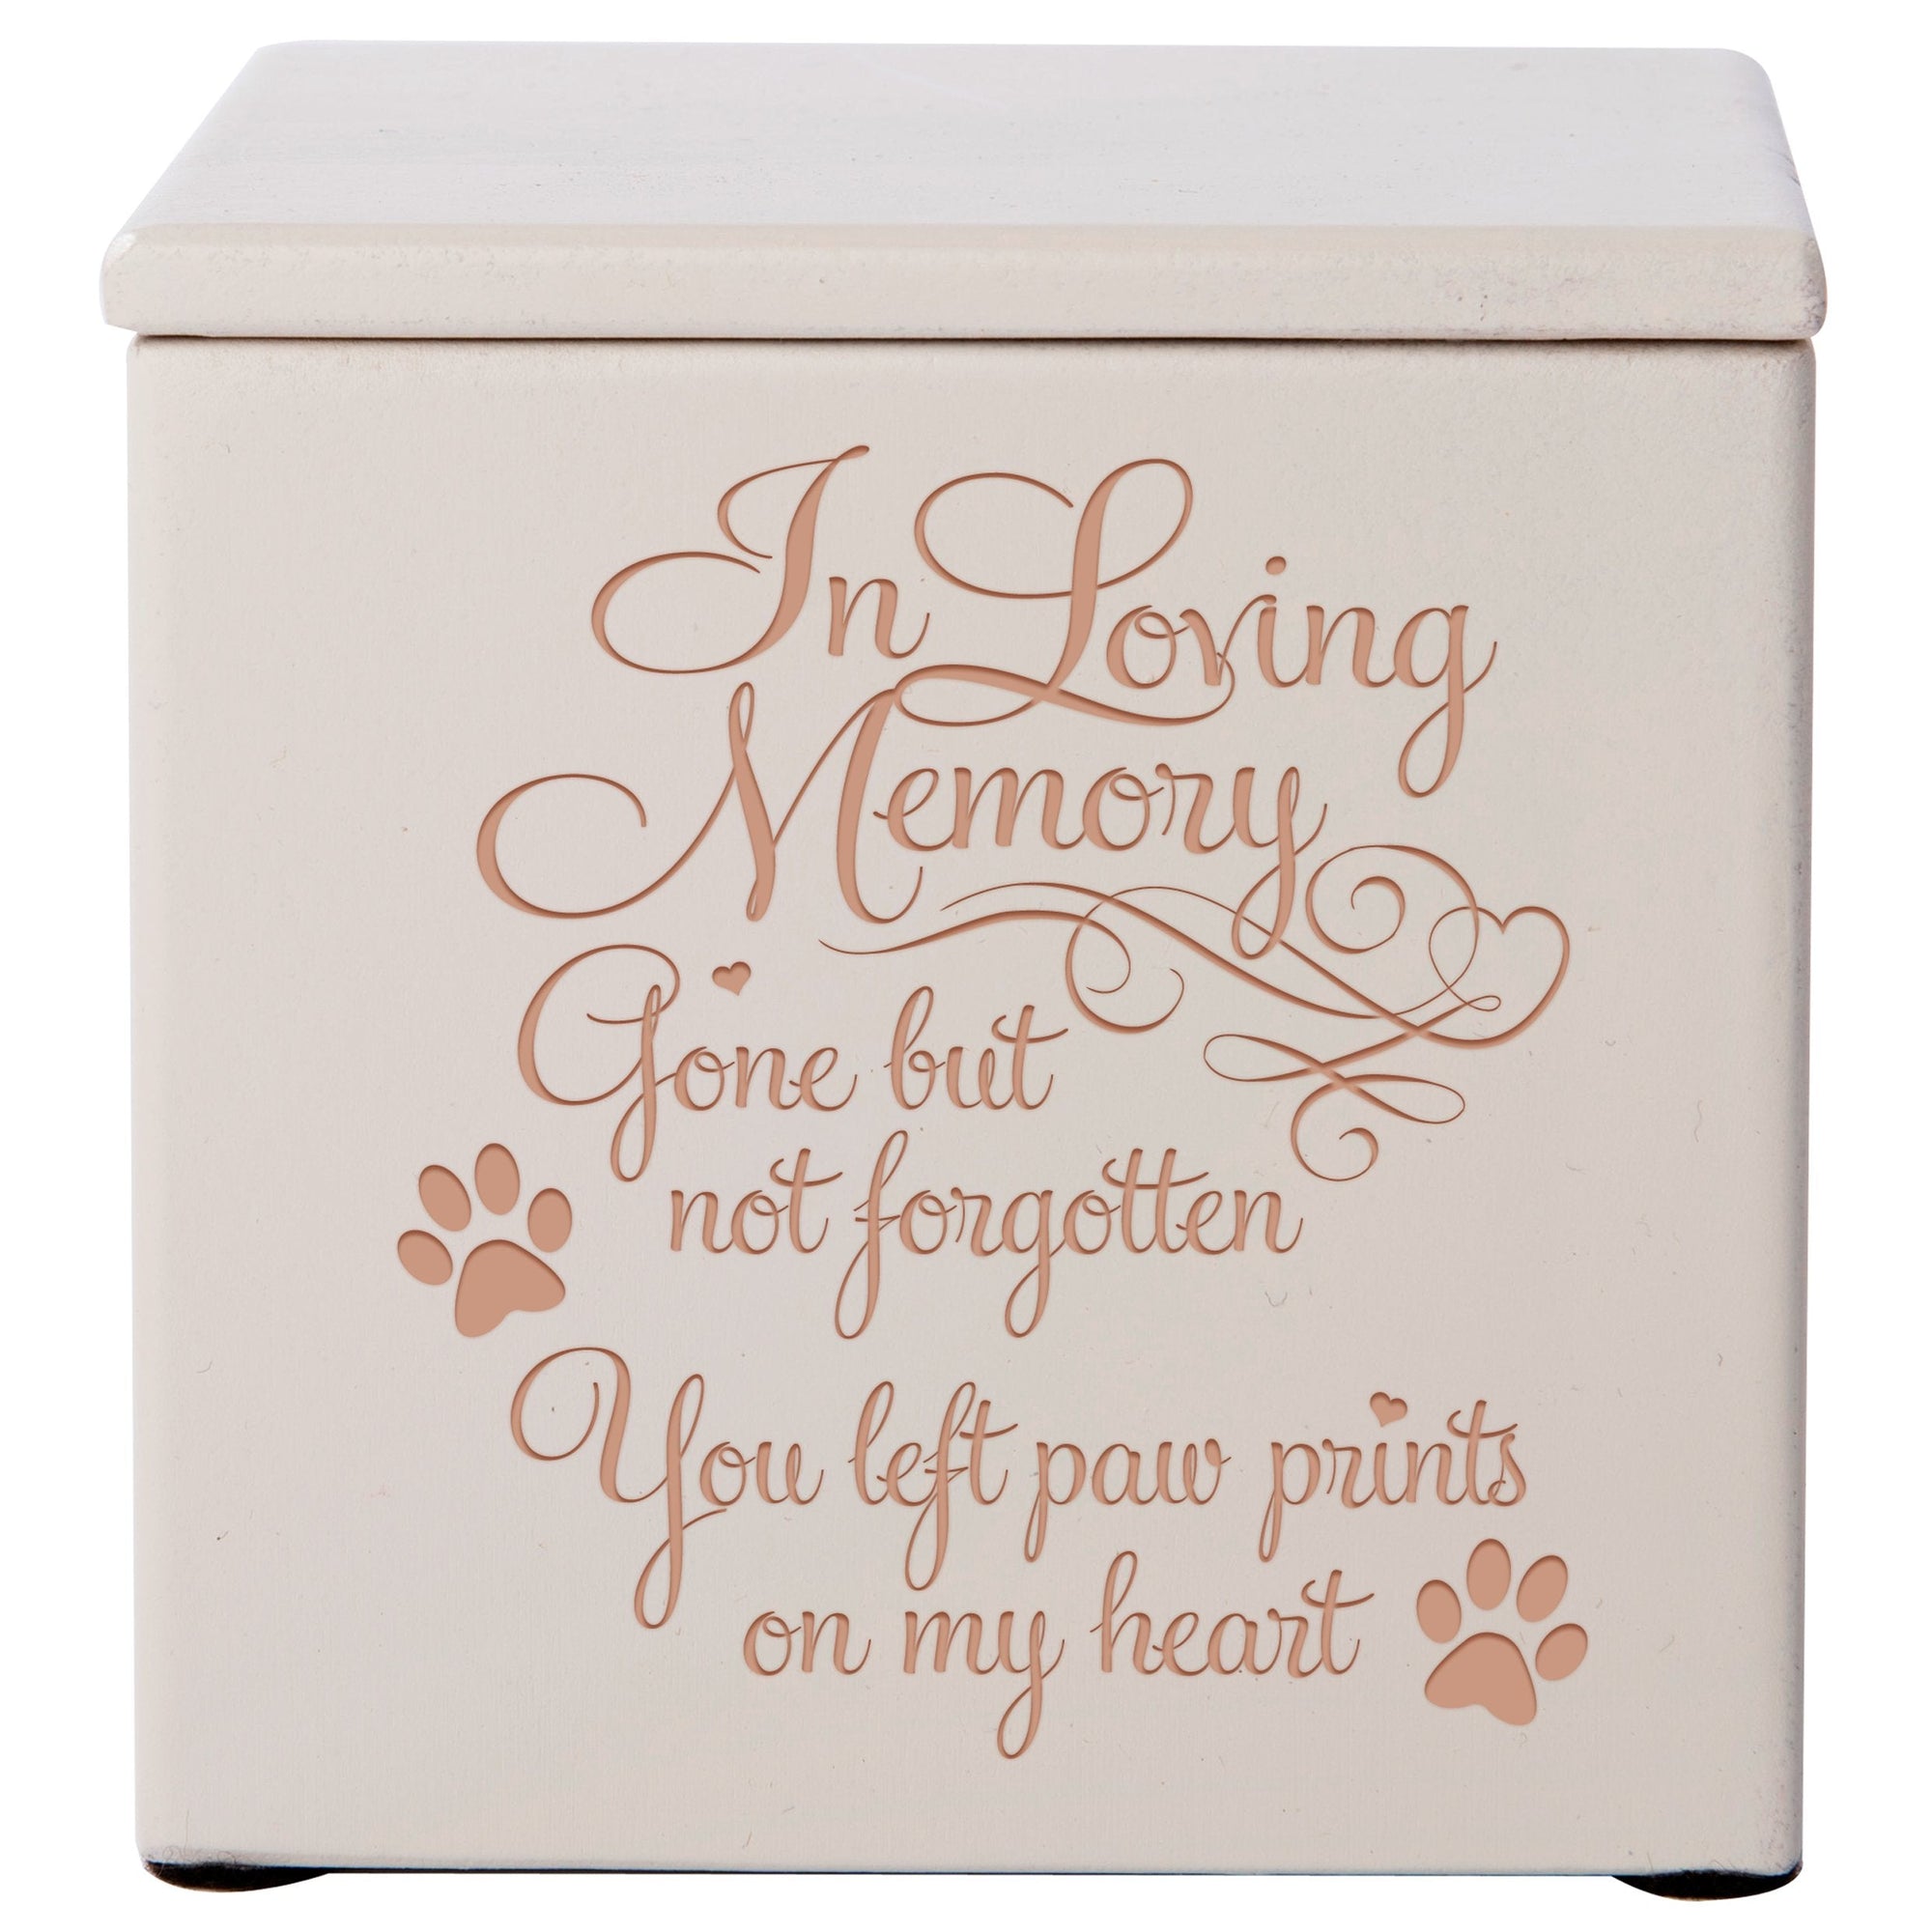 Ivory Pet Memorial 3.5x3.5 Keepsake Urn with phrase "Gone But Not Forgotten"